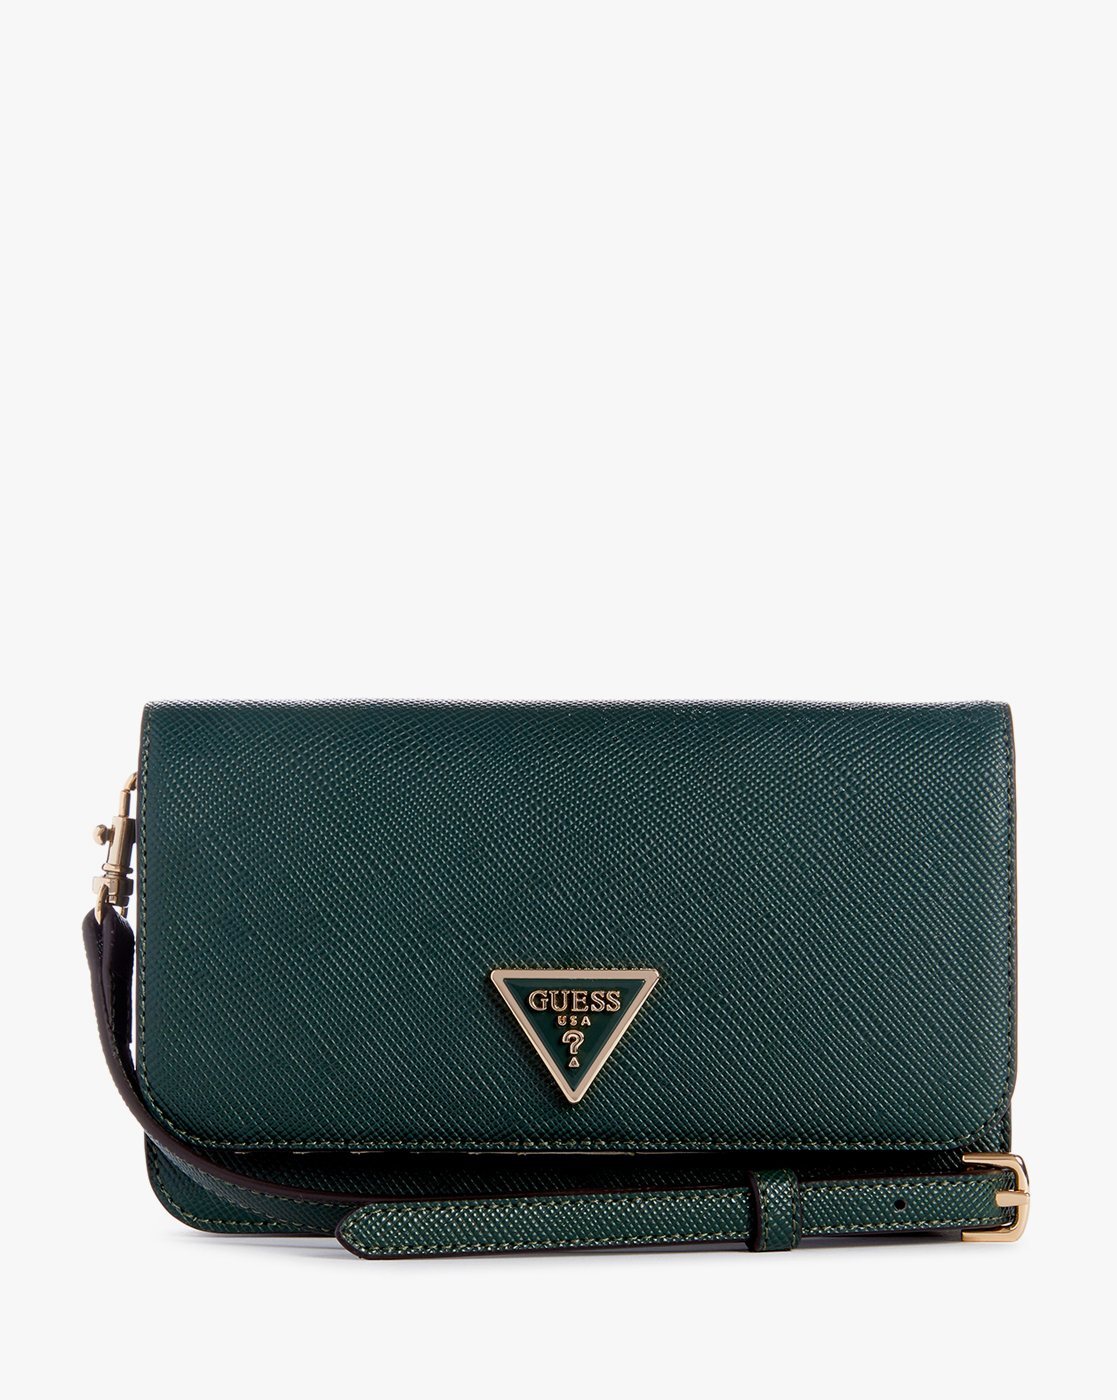 Buy GUESS Noelle Top Zip Shoulder Bag, Coal Logo, One Size at Amazon.in